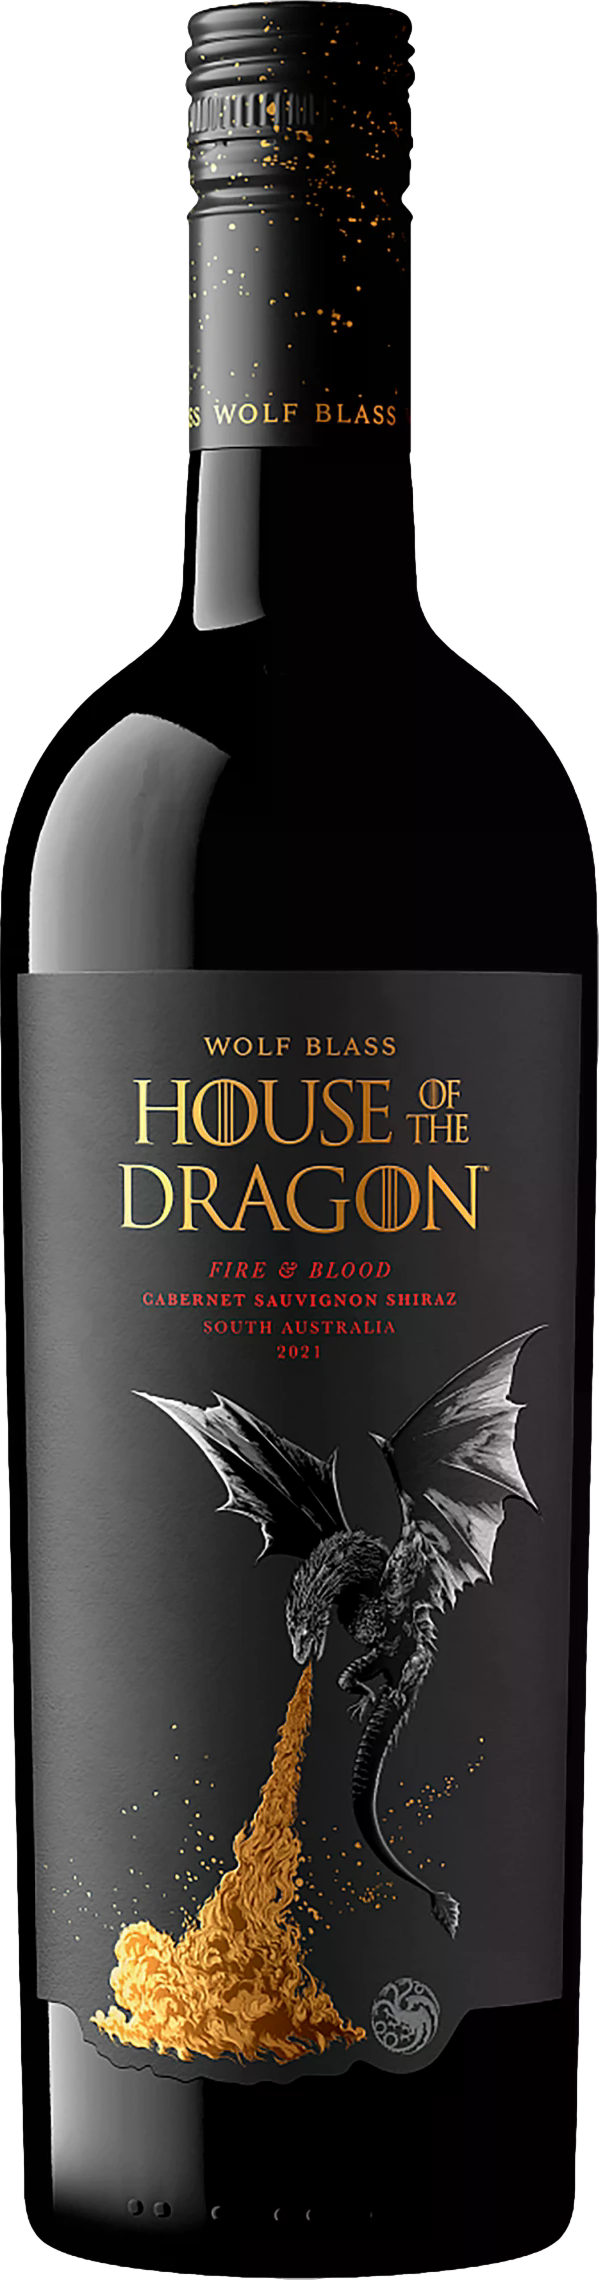 the Dragon günstig Kaufen-House of the Dragon Red Blend 2021. House of the Dragon Red Blend 2021 . 